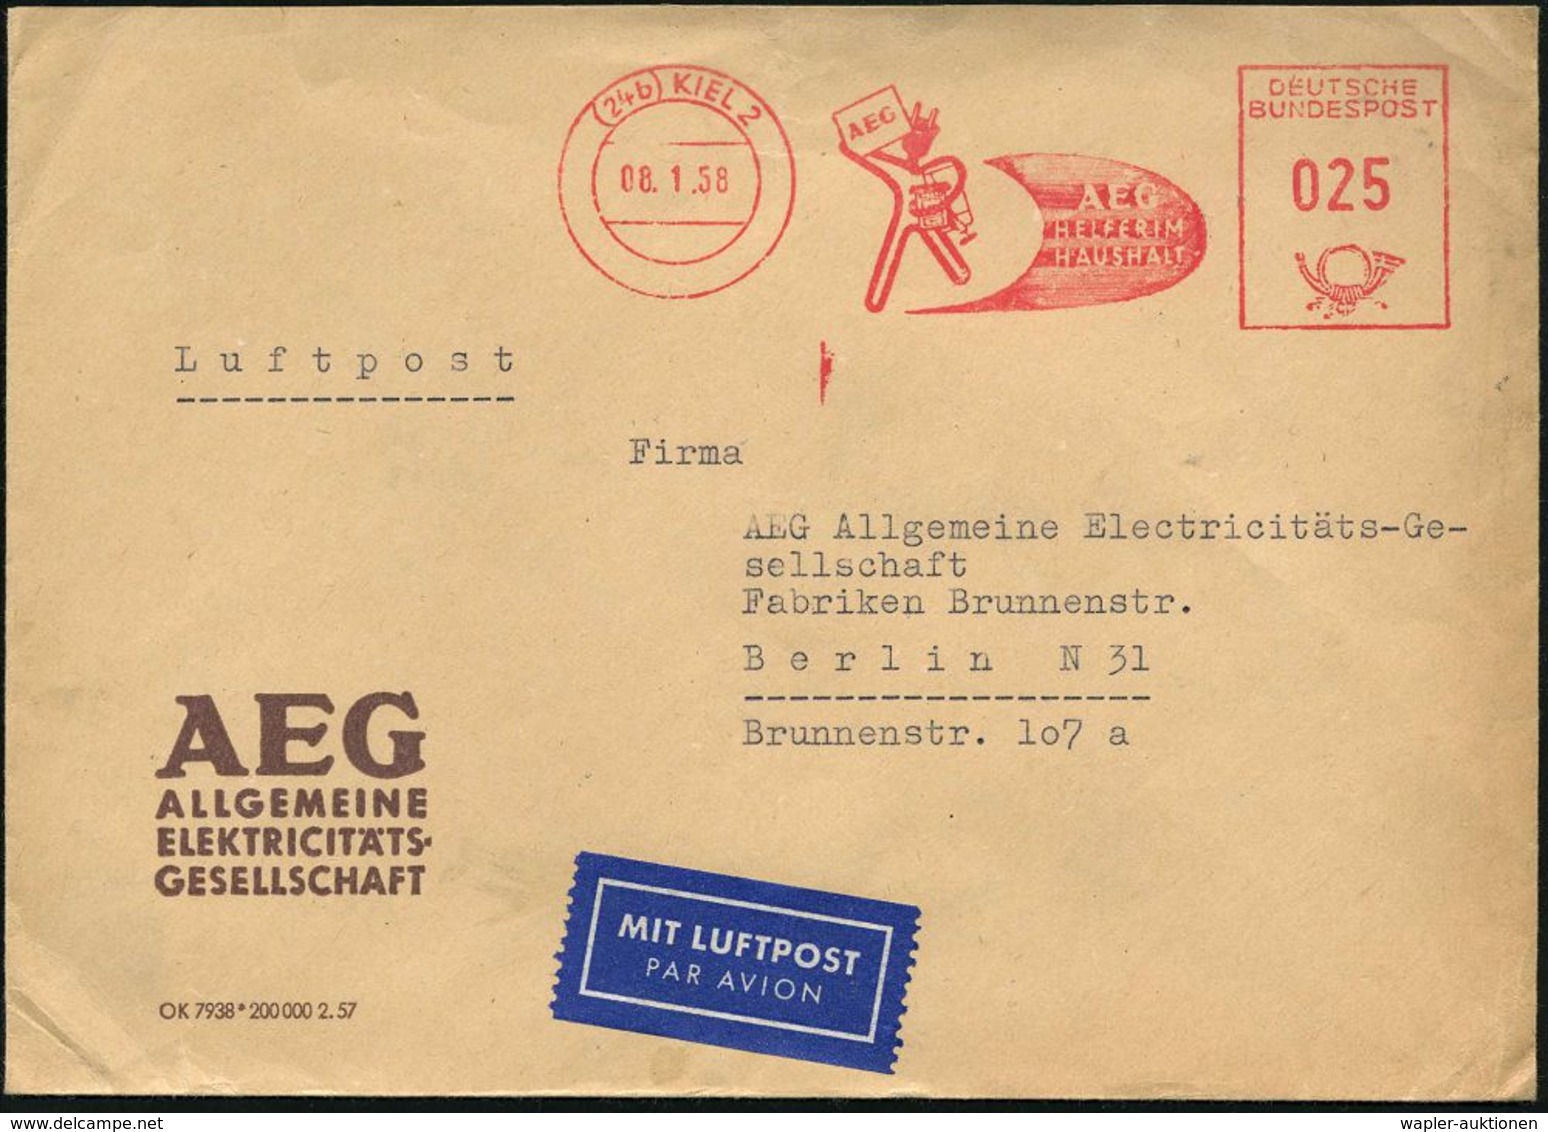 (24b) KIEL 2/ AEG/ HELFER IM/ HAUSHALT 1958 (8.1.) AFS 025 Pf. "Elektro-Teufel" Aus Elektrokabel (tansportiert Elektrohe - Electricité